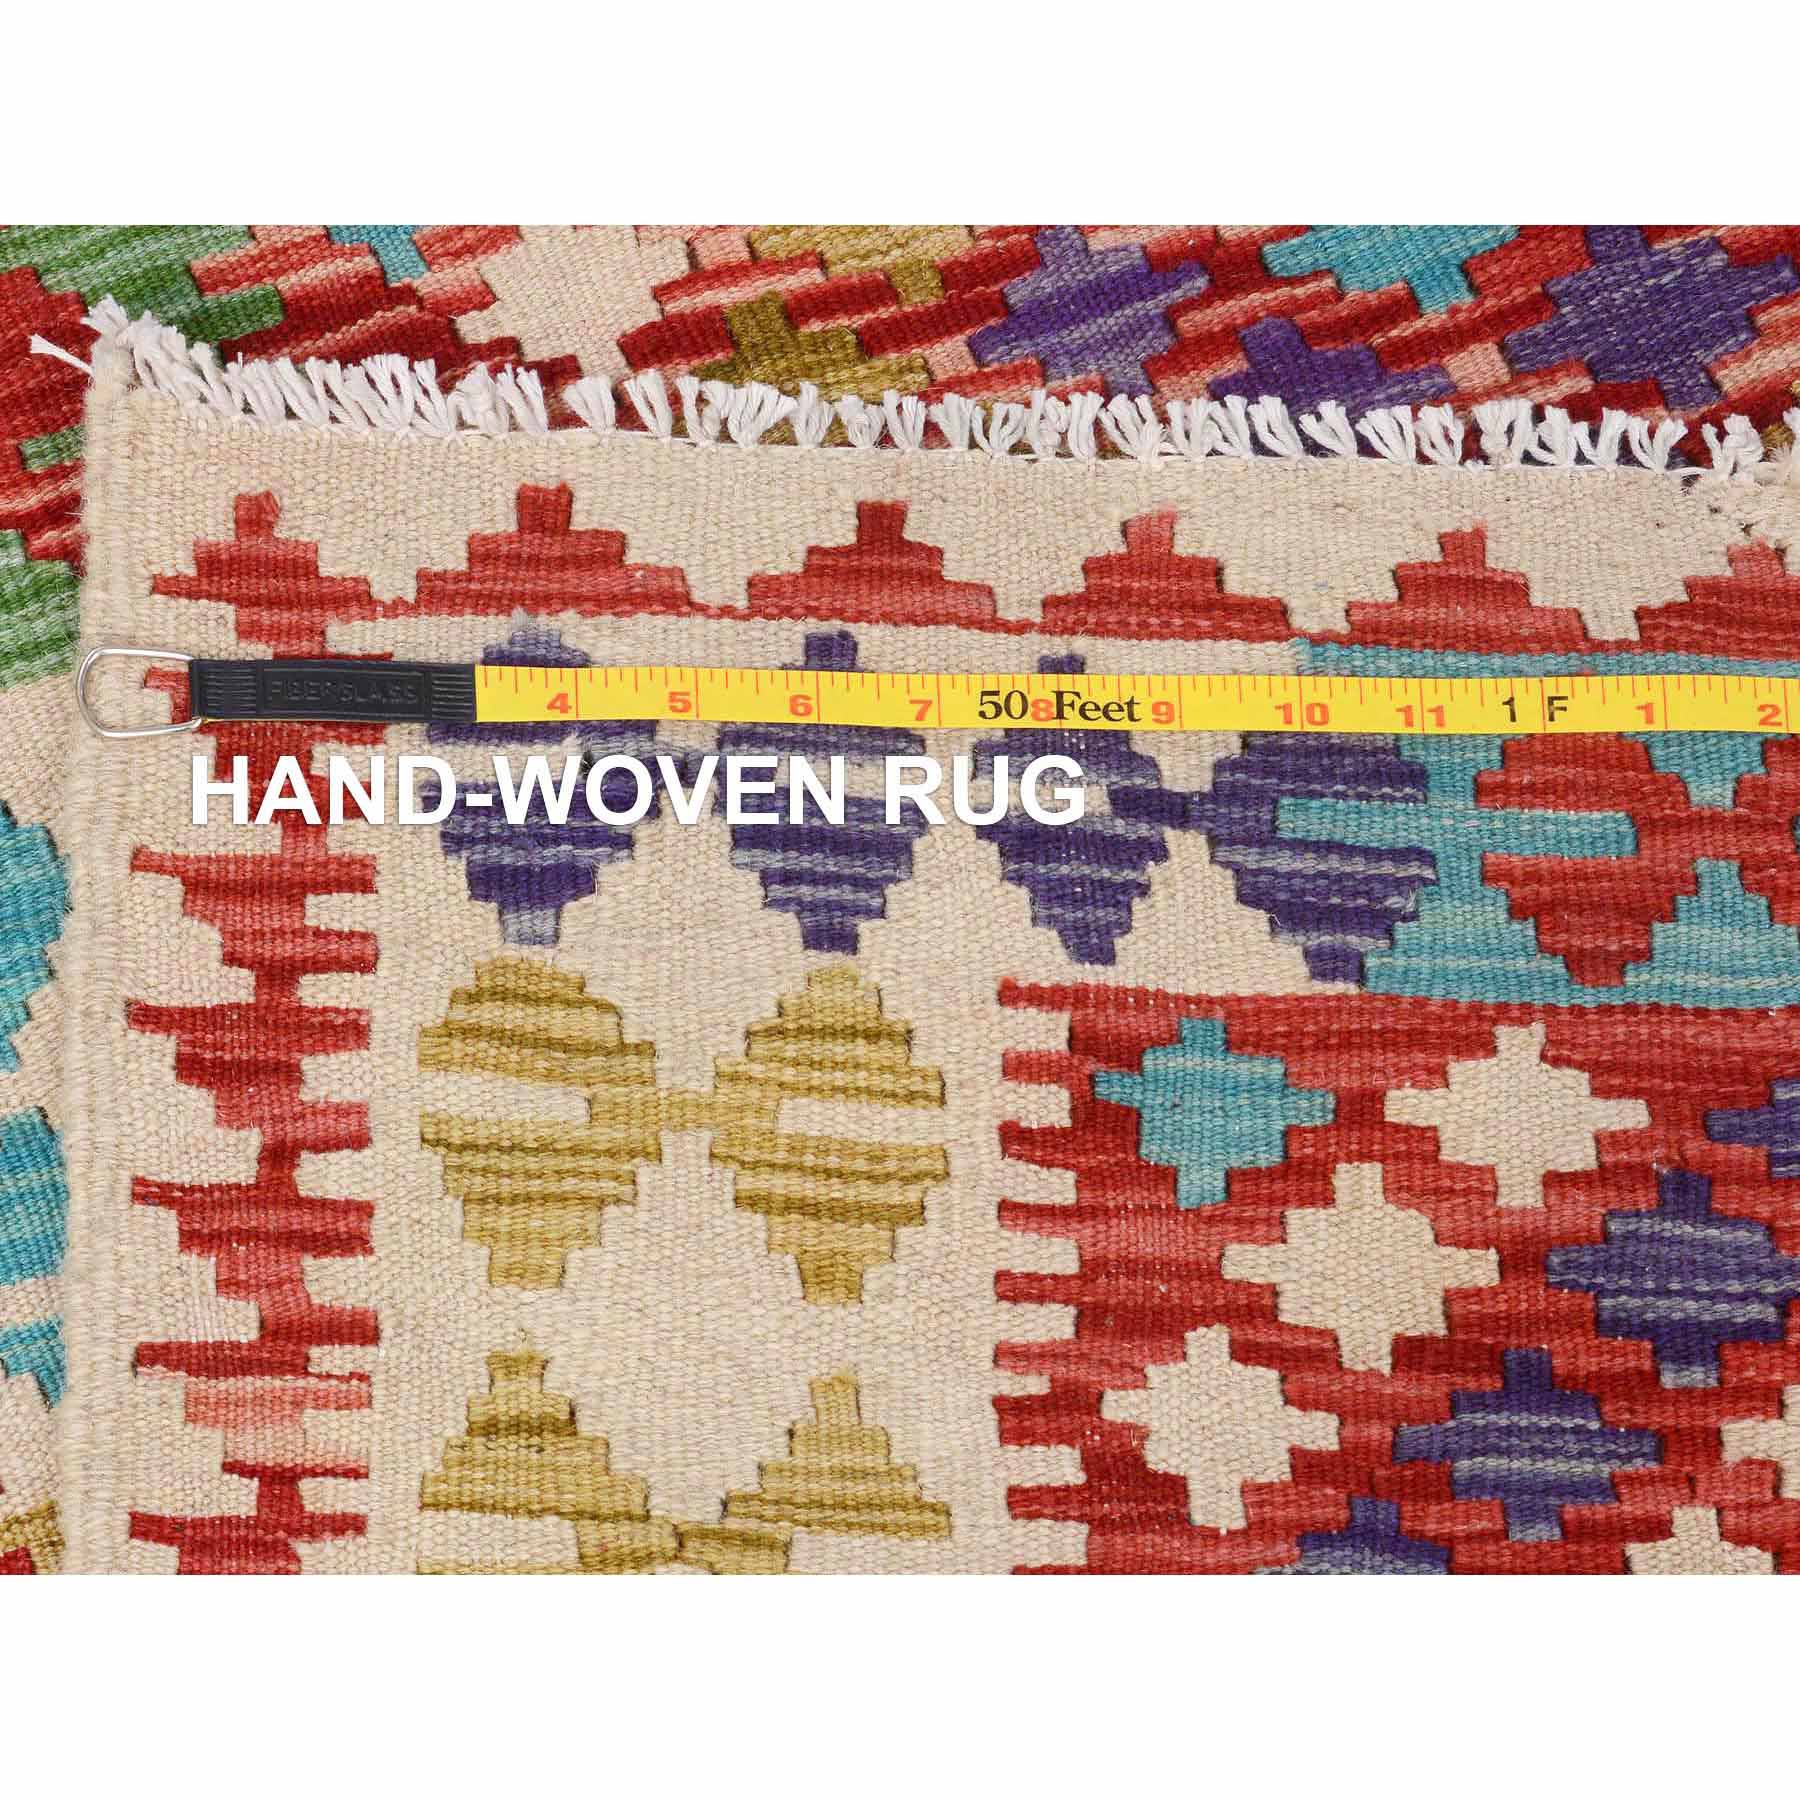 Flat-Weave-Hand-Woven-Rug-287985